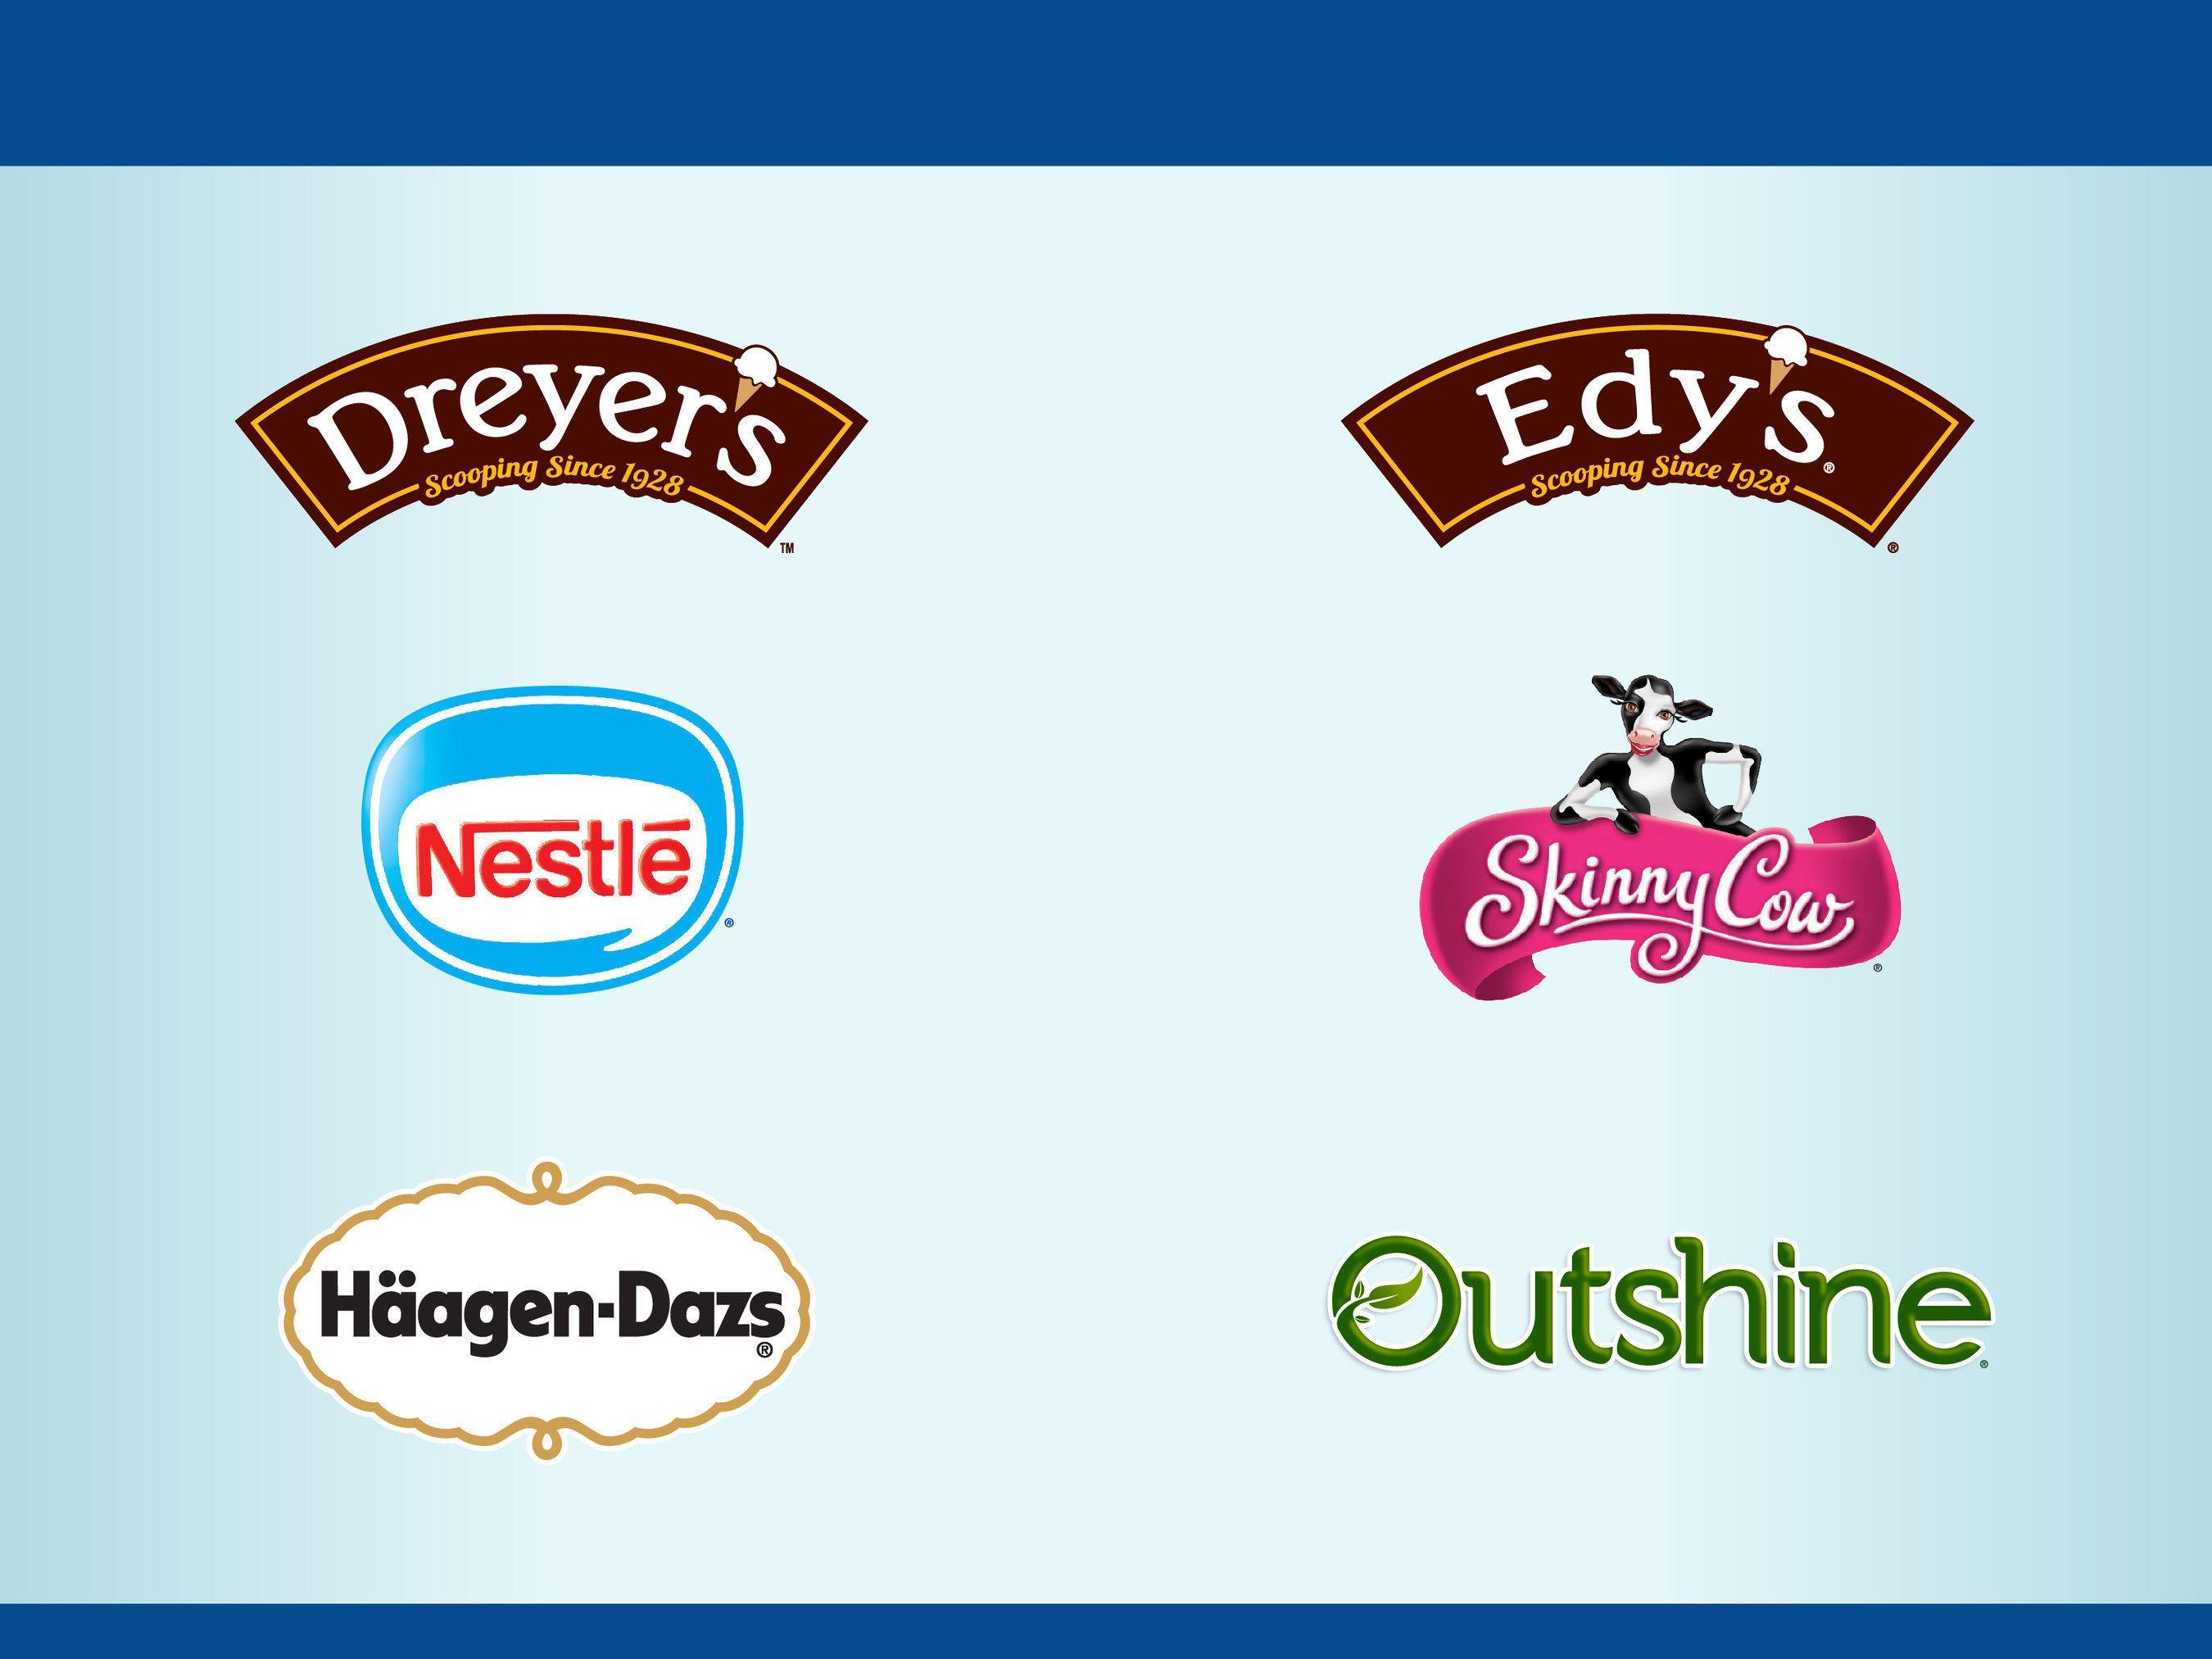 Nestle Ice Cream Logo - Nestlé Raises The Bar On Ice Cream With Move To Simpler Ingredients